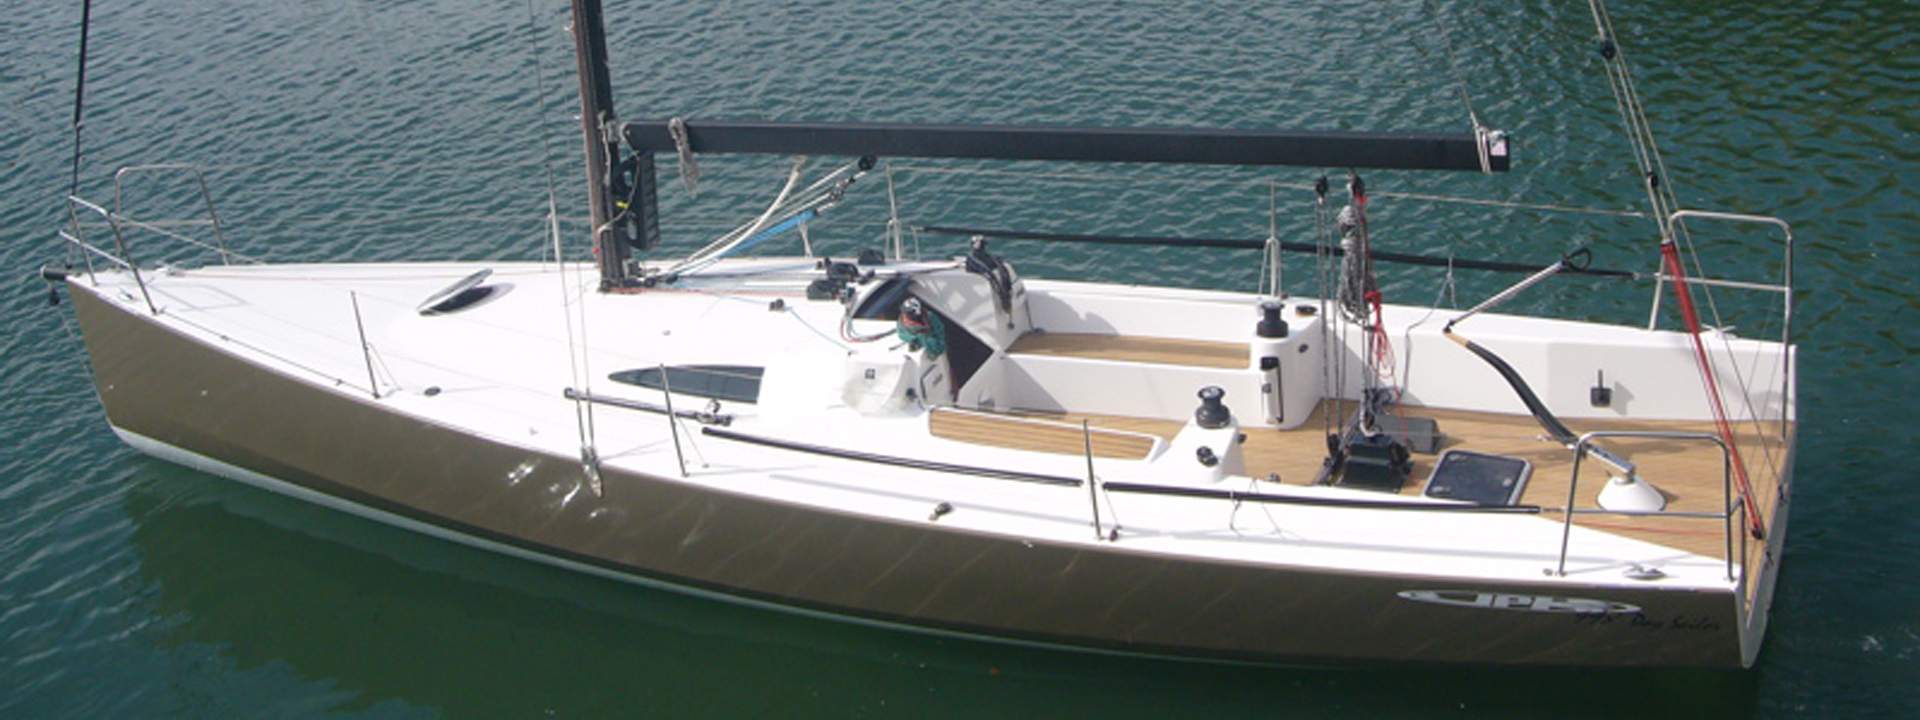 Sailboat JPK 960